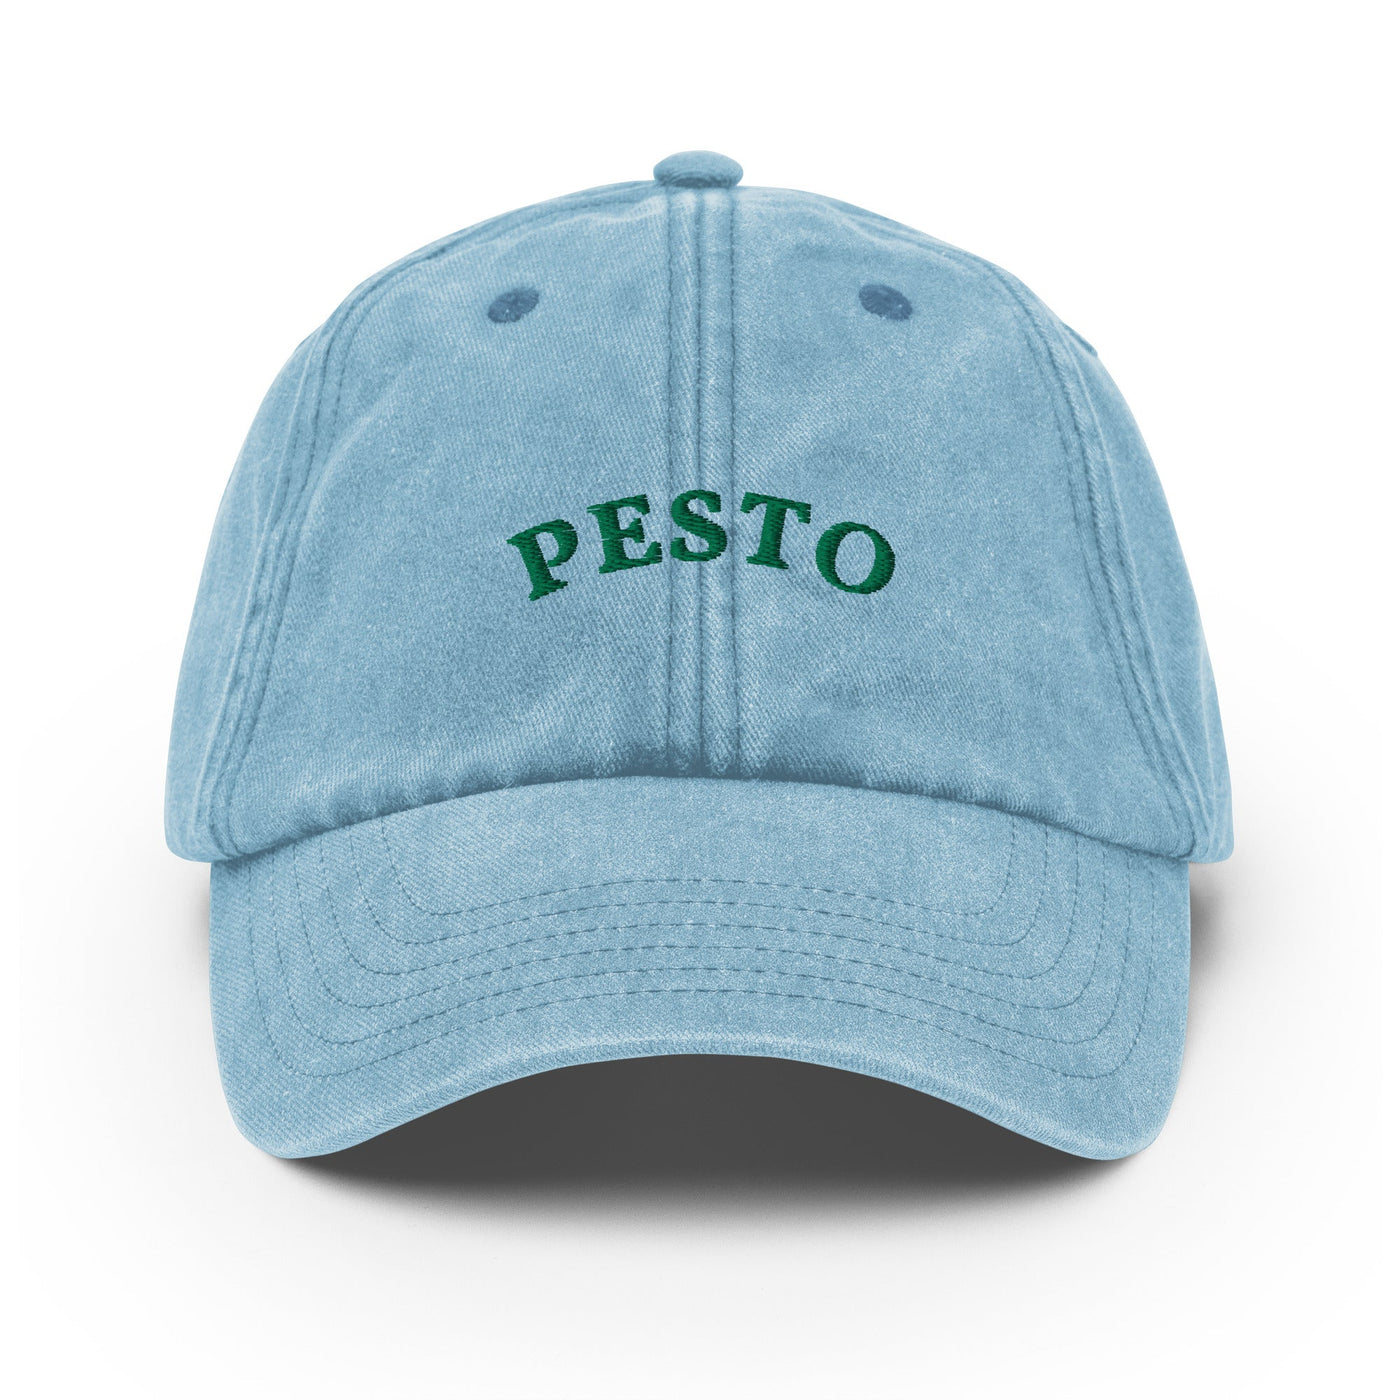 Pesto - Embroidered Vintage Cap